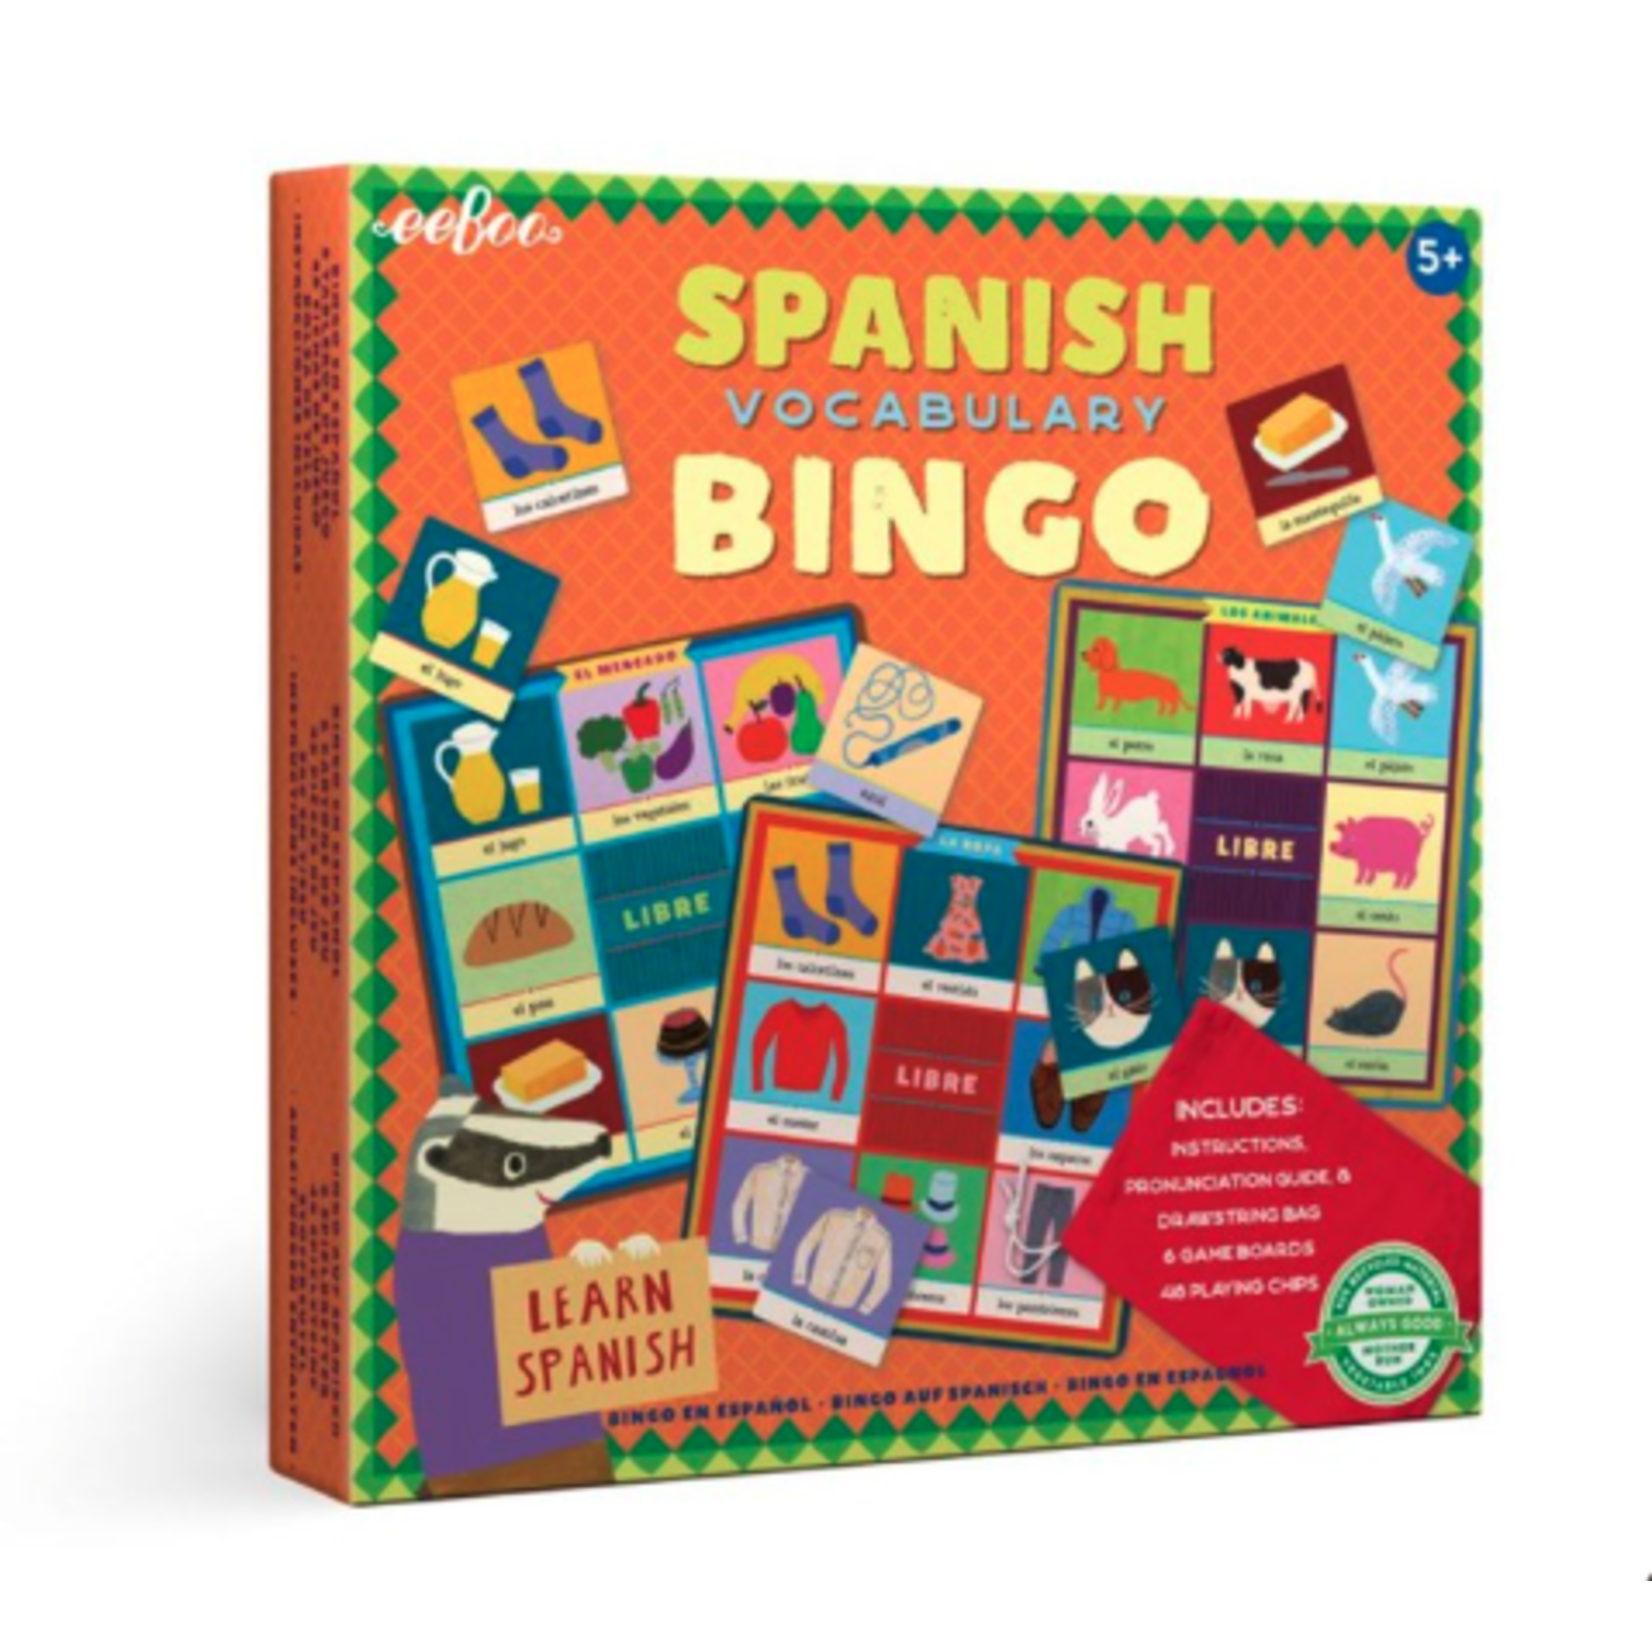 Spanish Bingo